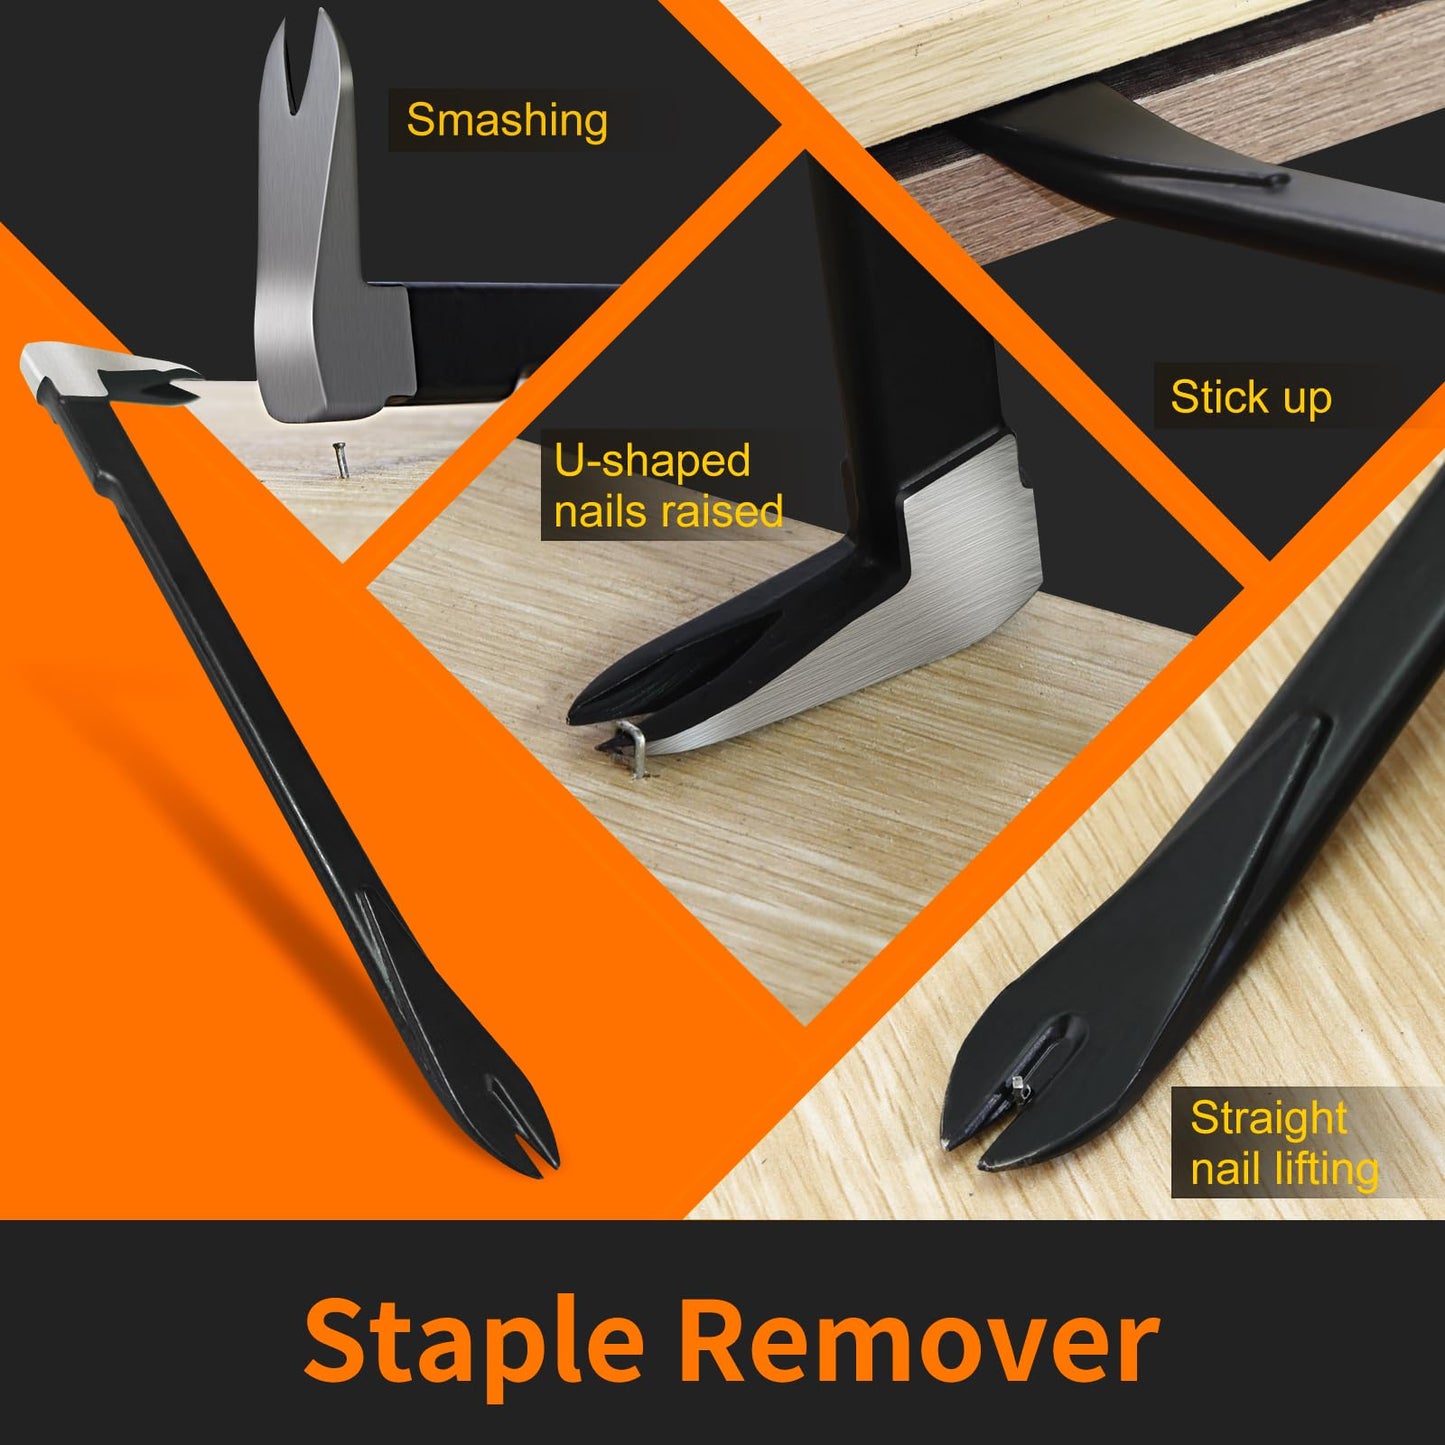 Staple Remover operation guide: Smashing/Stick up/U-shaped nails raised/Straight nail lifting